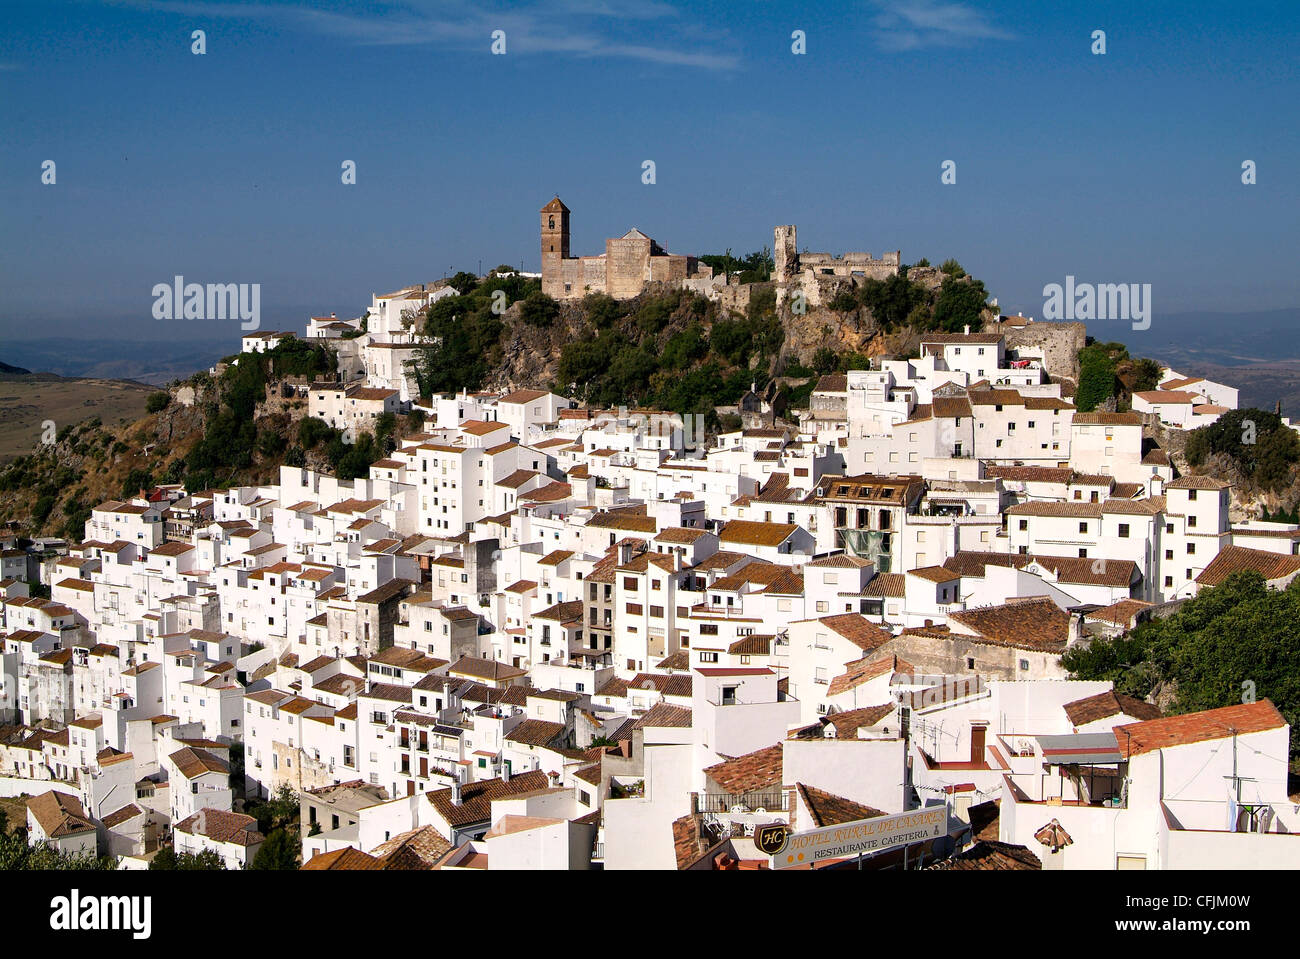 White village. Андалузия город в Испании. Испания Андалусия белые деревни. Деревня в Андалусии. Мальорка испанская деревня.